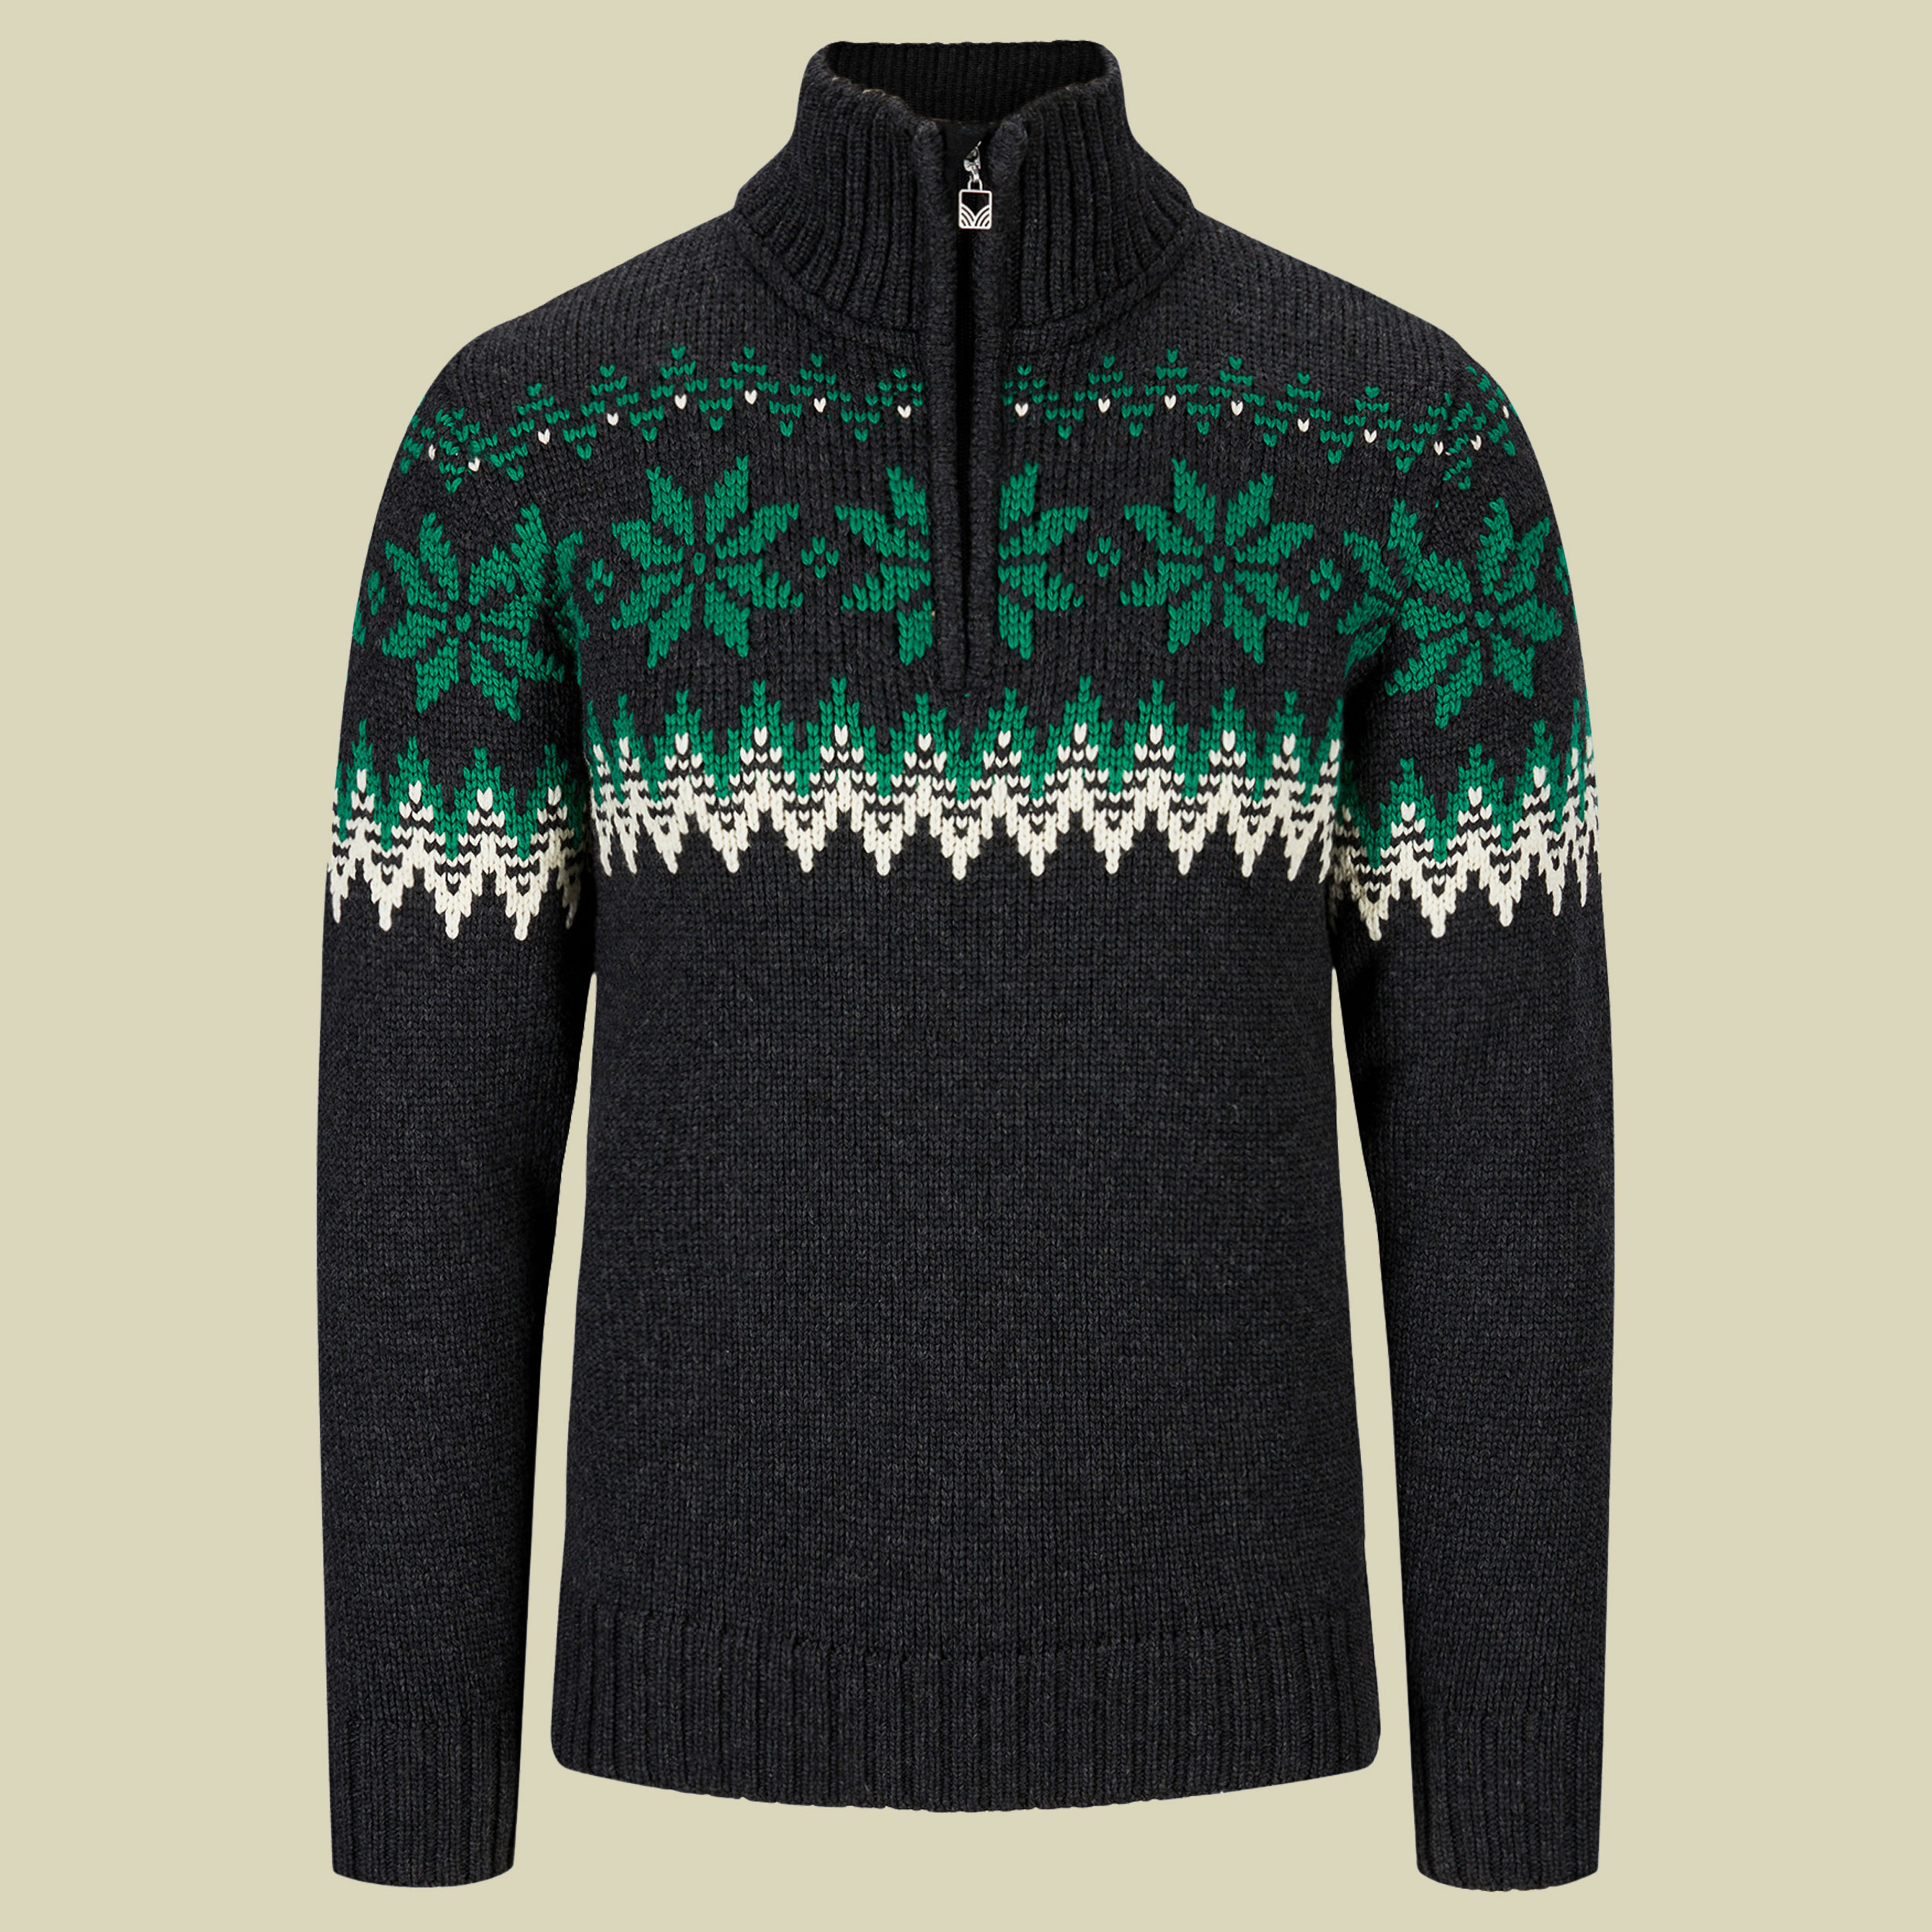 Myking Sweater Men Größe XL Farbe dark charcoal/bright green/off white